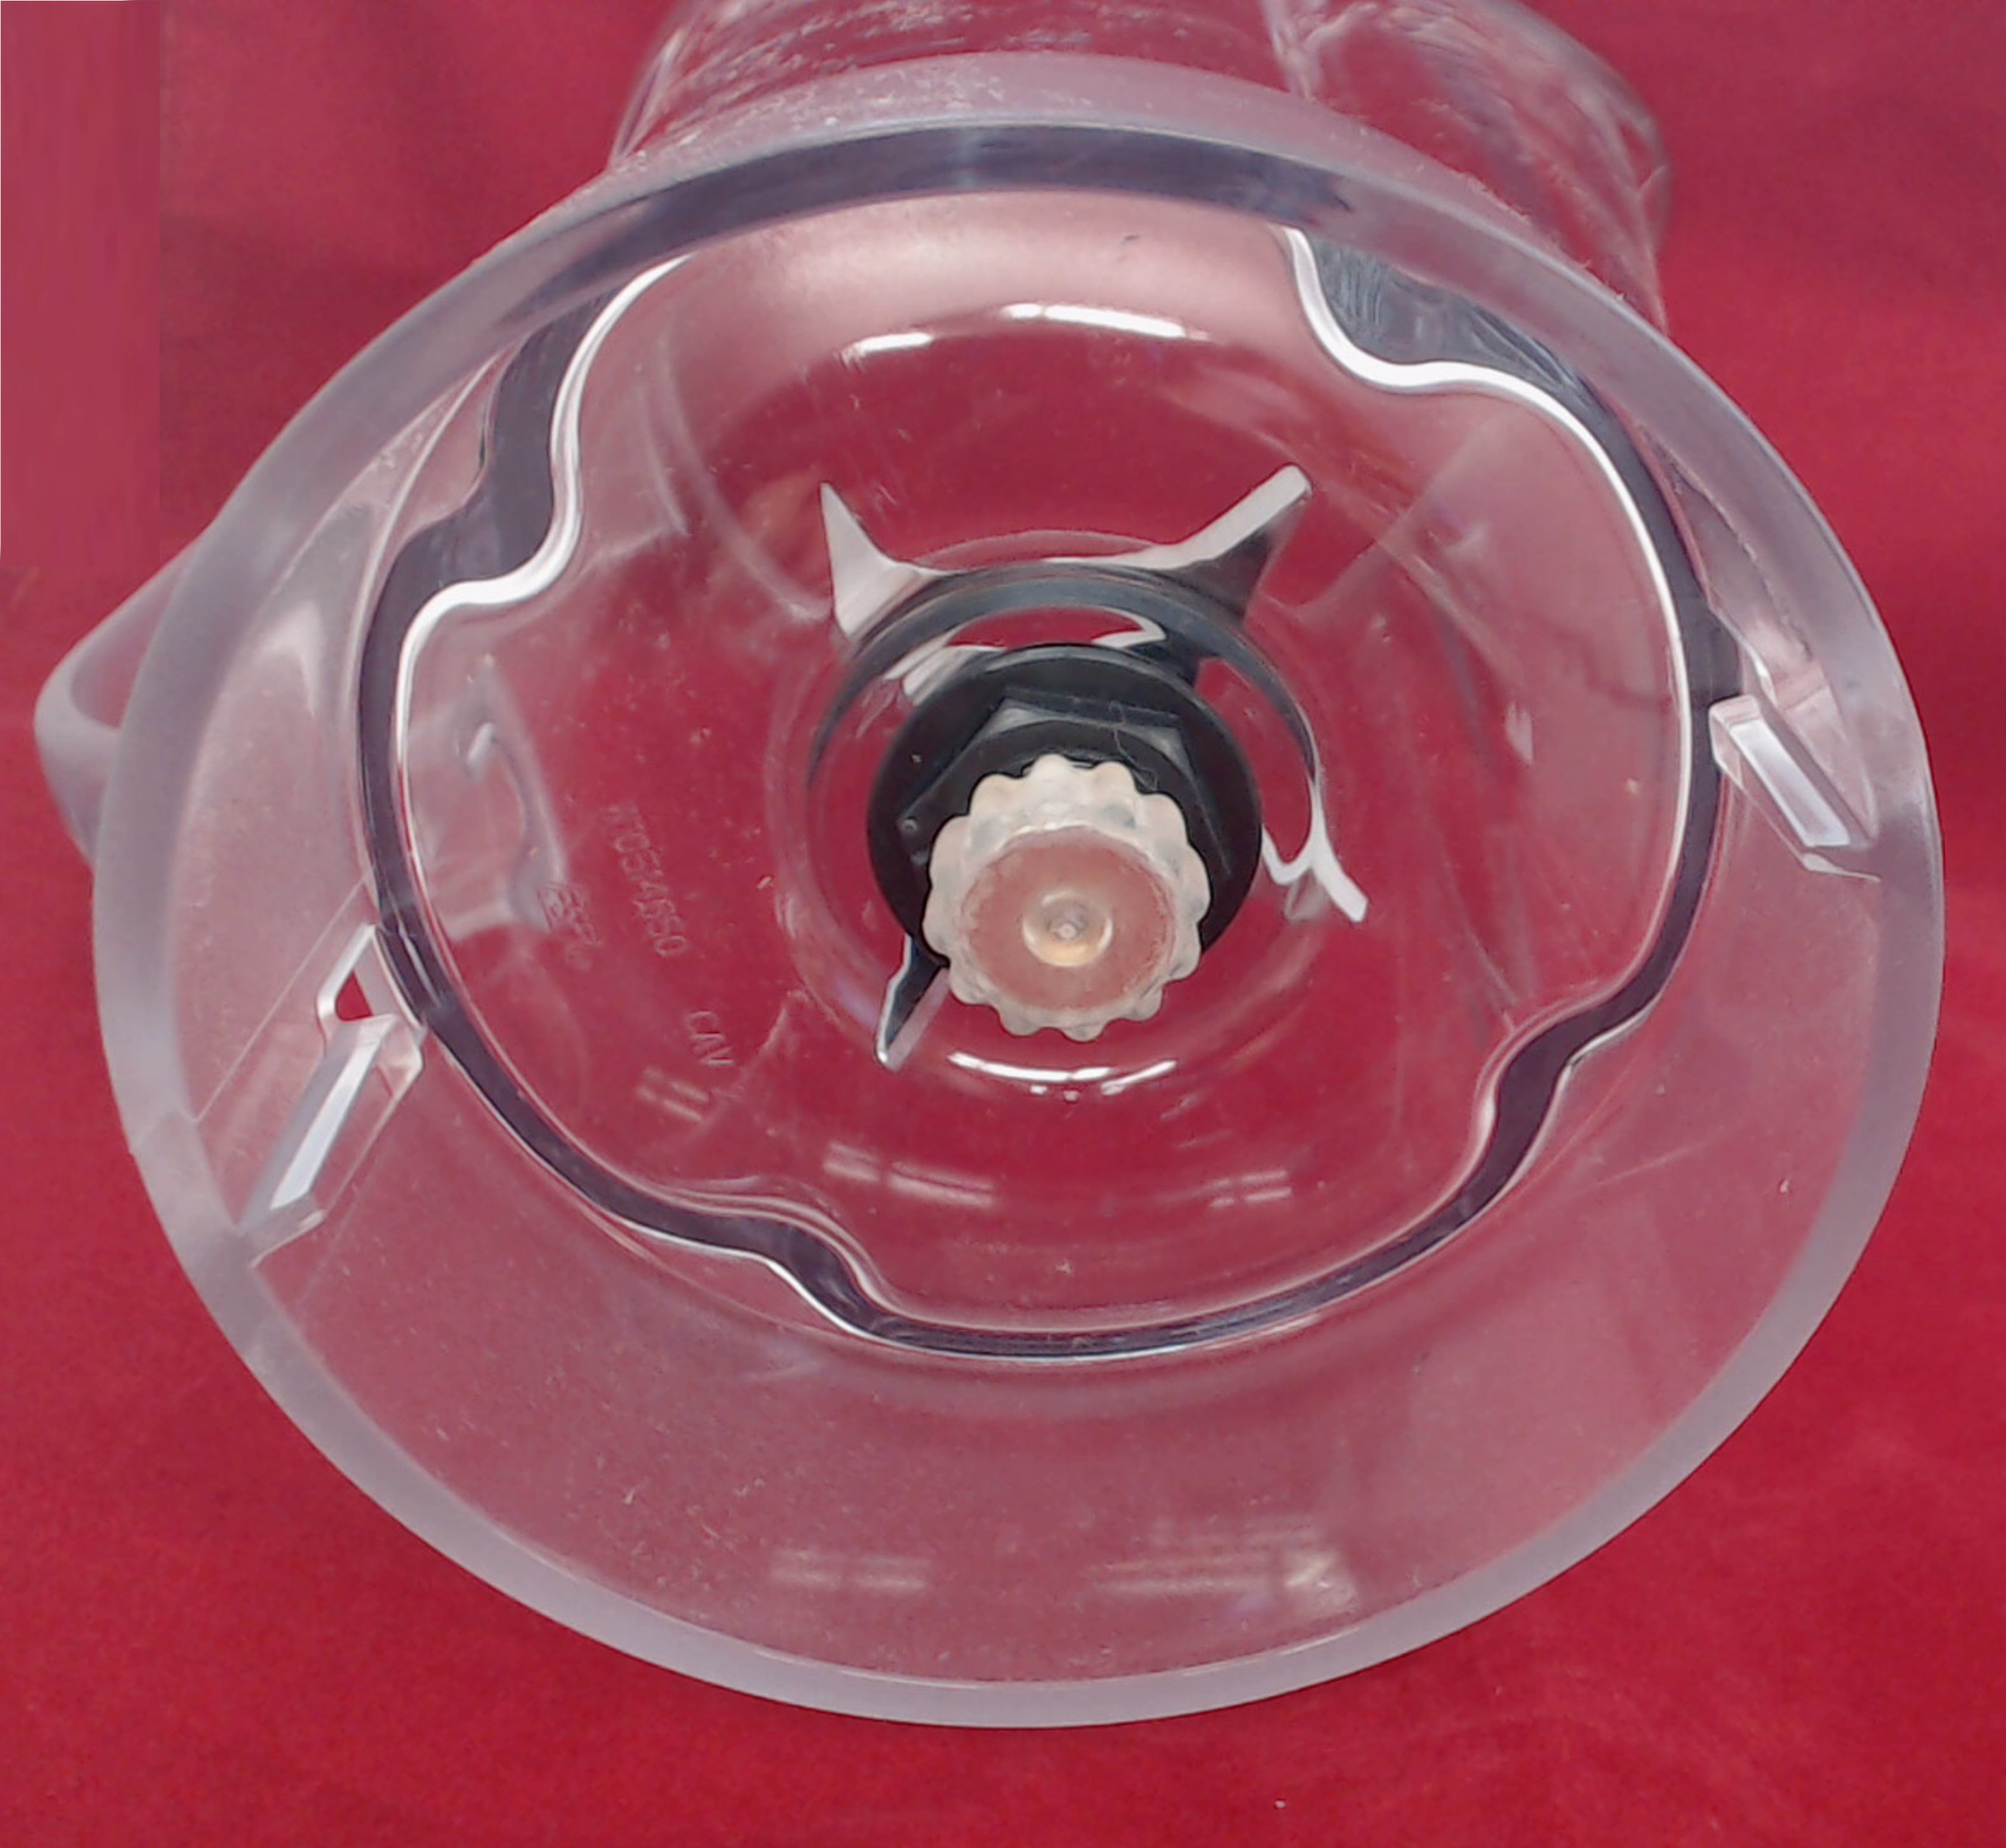 General Electric Replacement Blender Jar, Part #WPW10555711